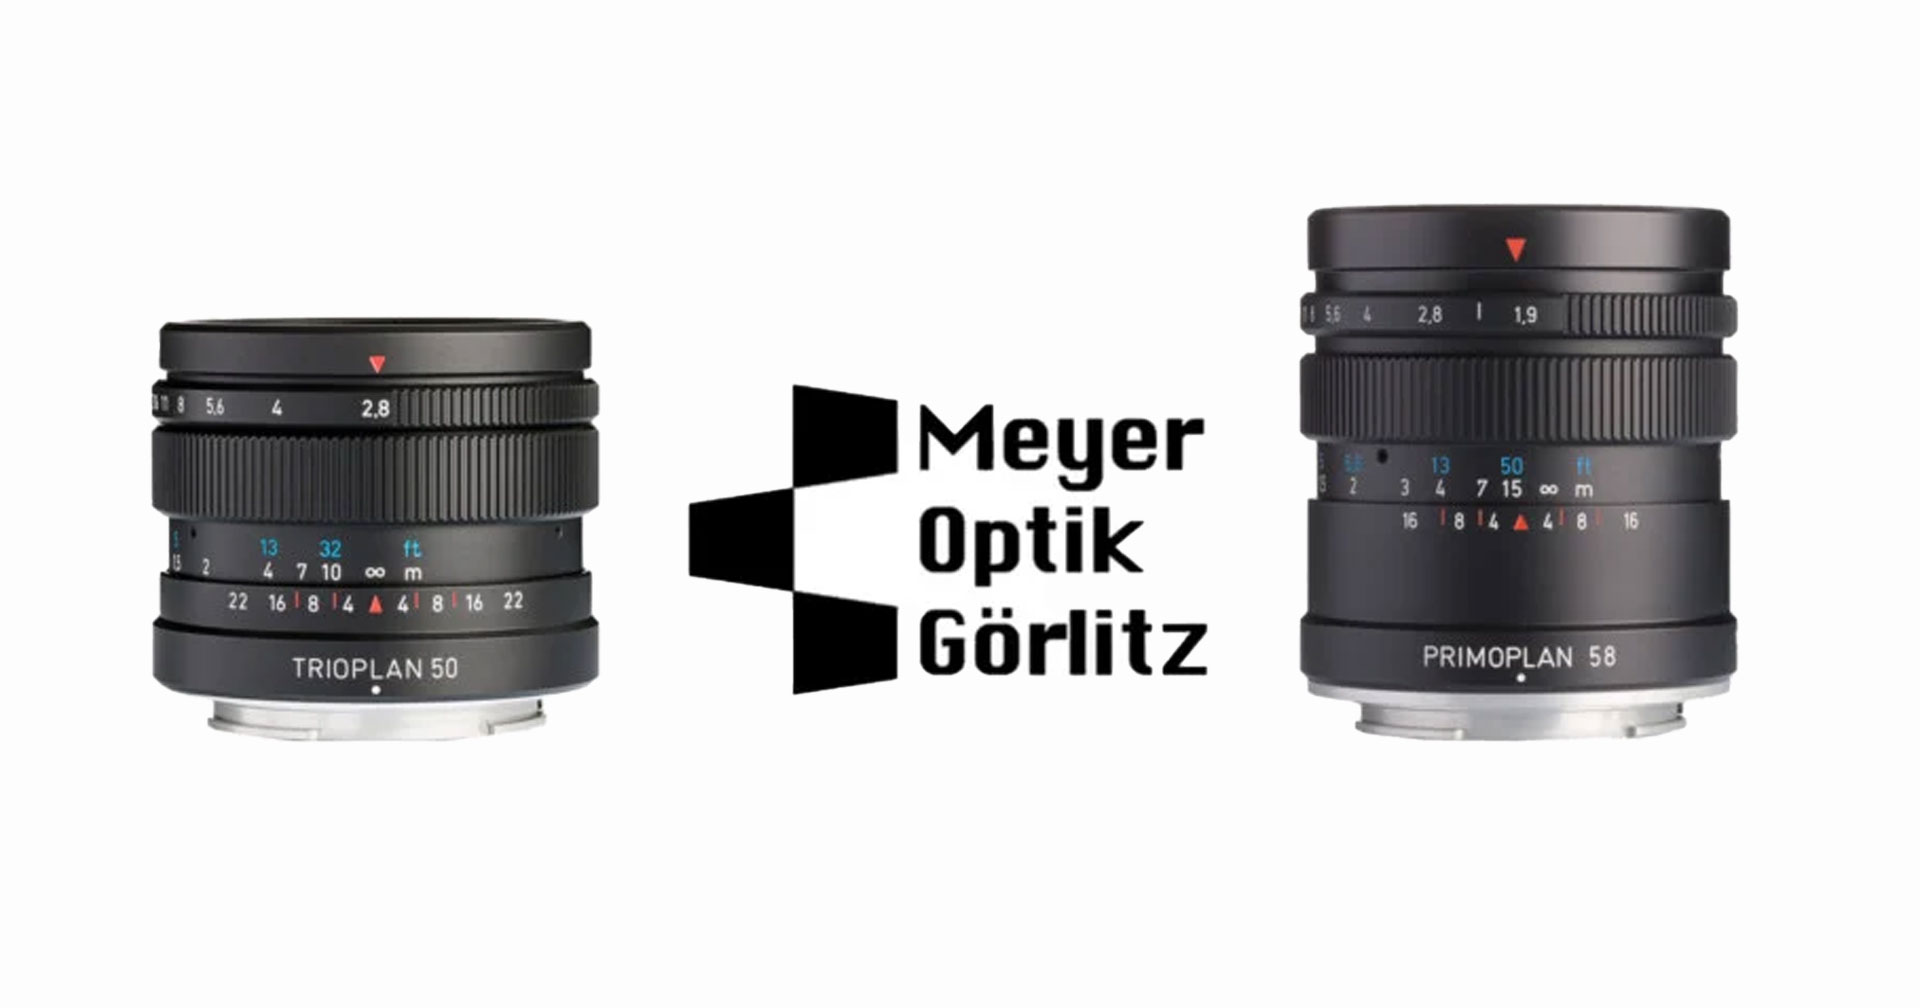 Meyer Optik Görlitz เพิ่มตัวเลือกเมาท์เลนส์ใหม่ รองรับกล้อง Canon RF และ Nikon Z แล้ว! 